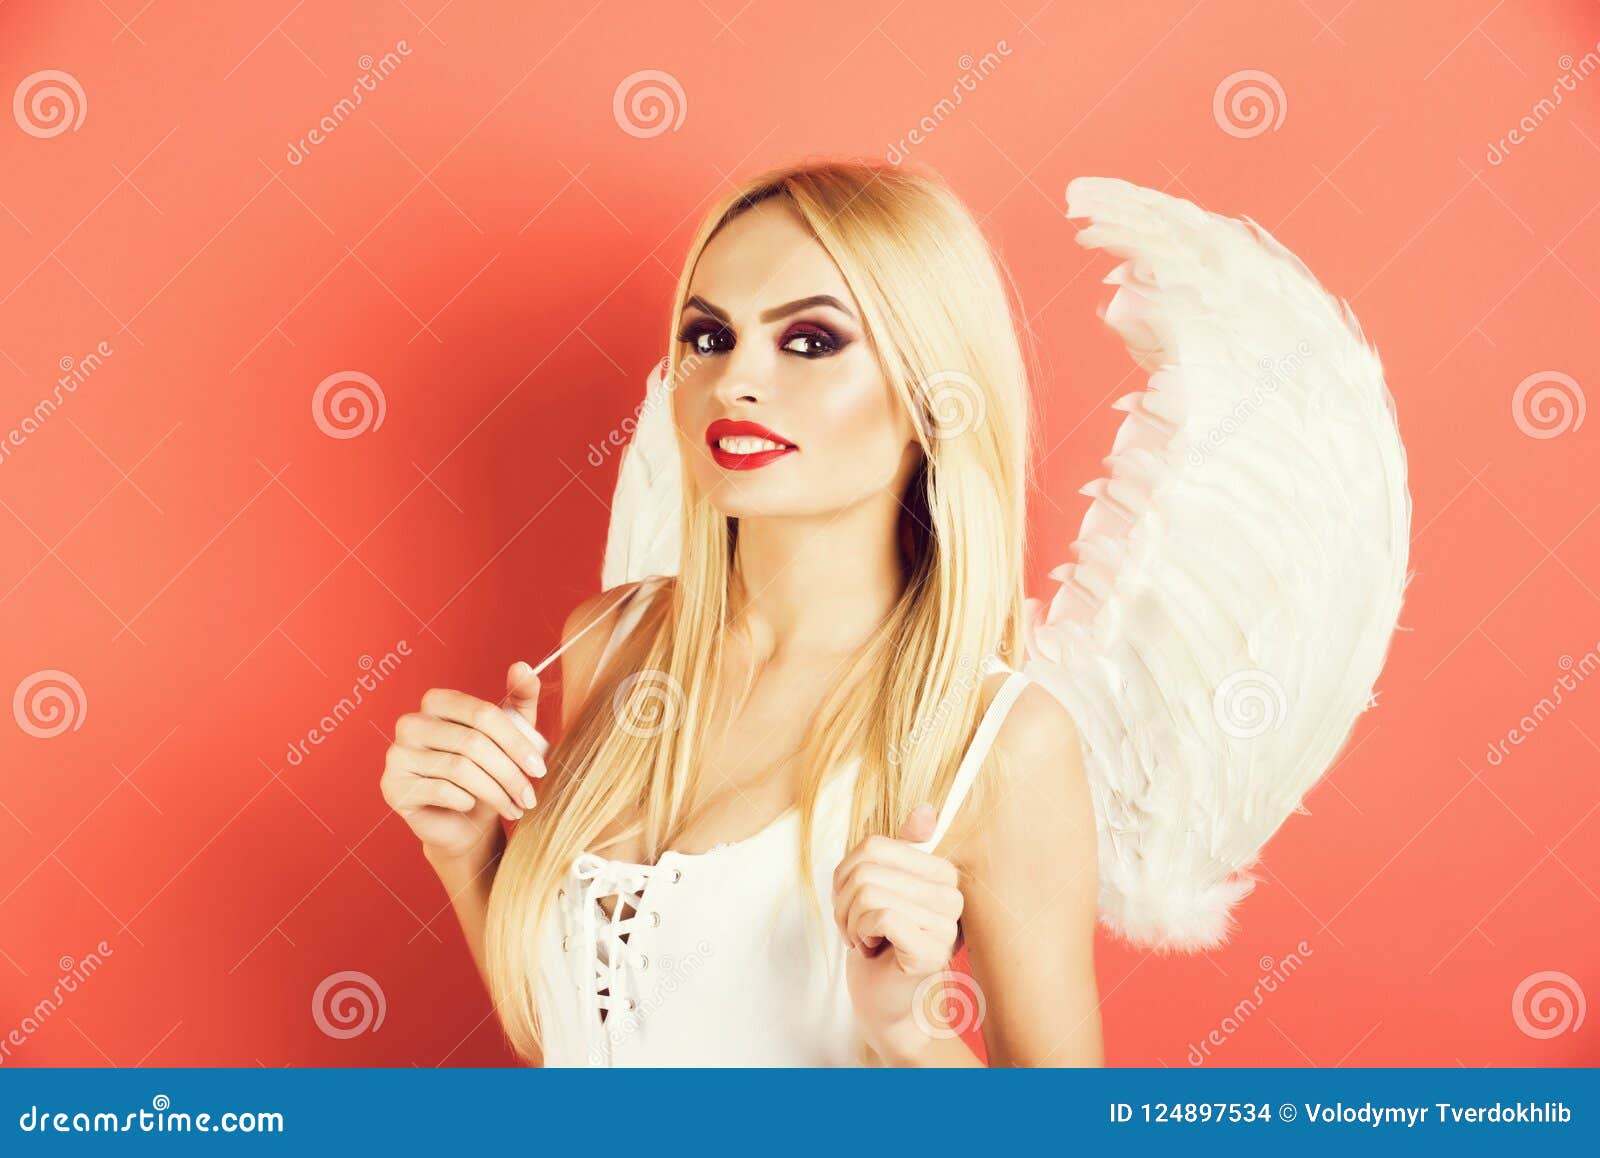 2-in-1 Angel Wing Combo | Cute girls hairstyles, Hair styles, Braided  hairstyles easy